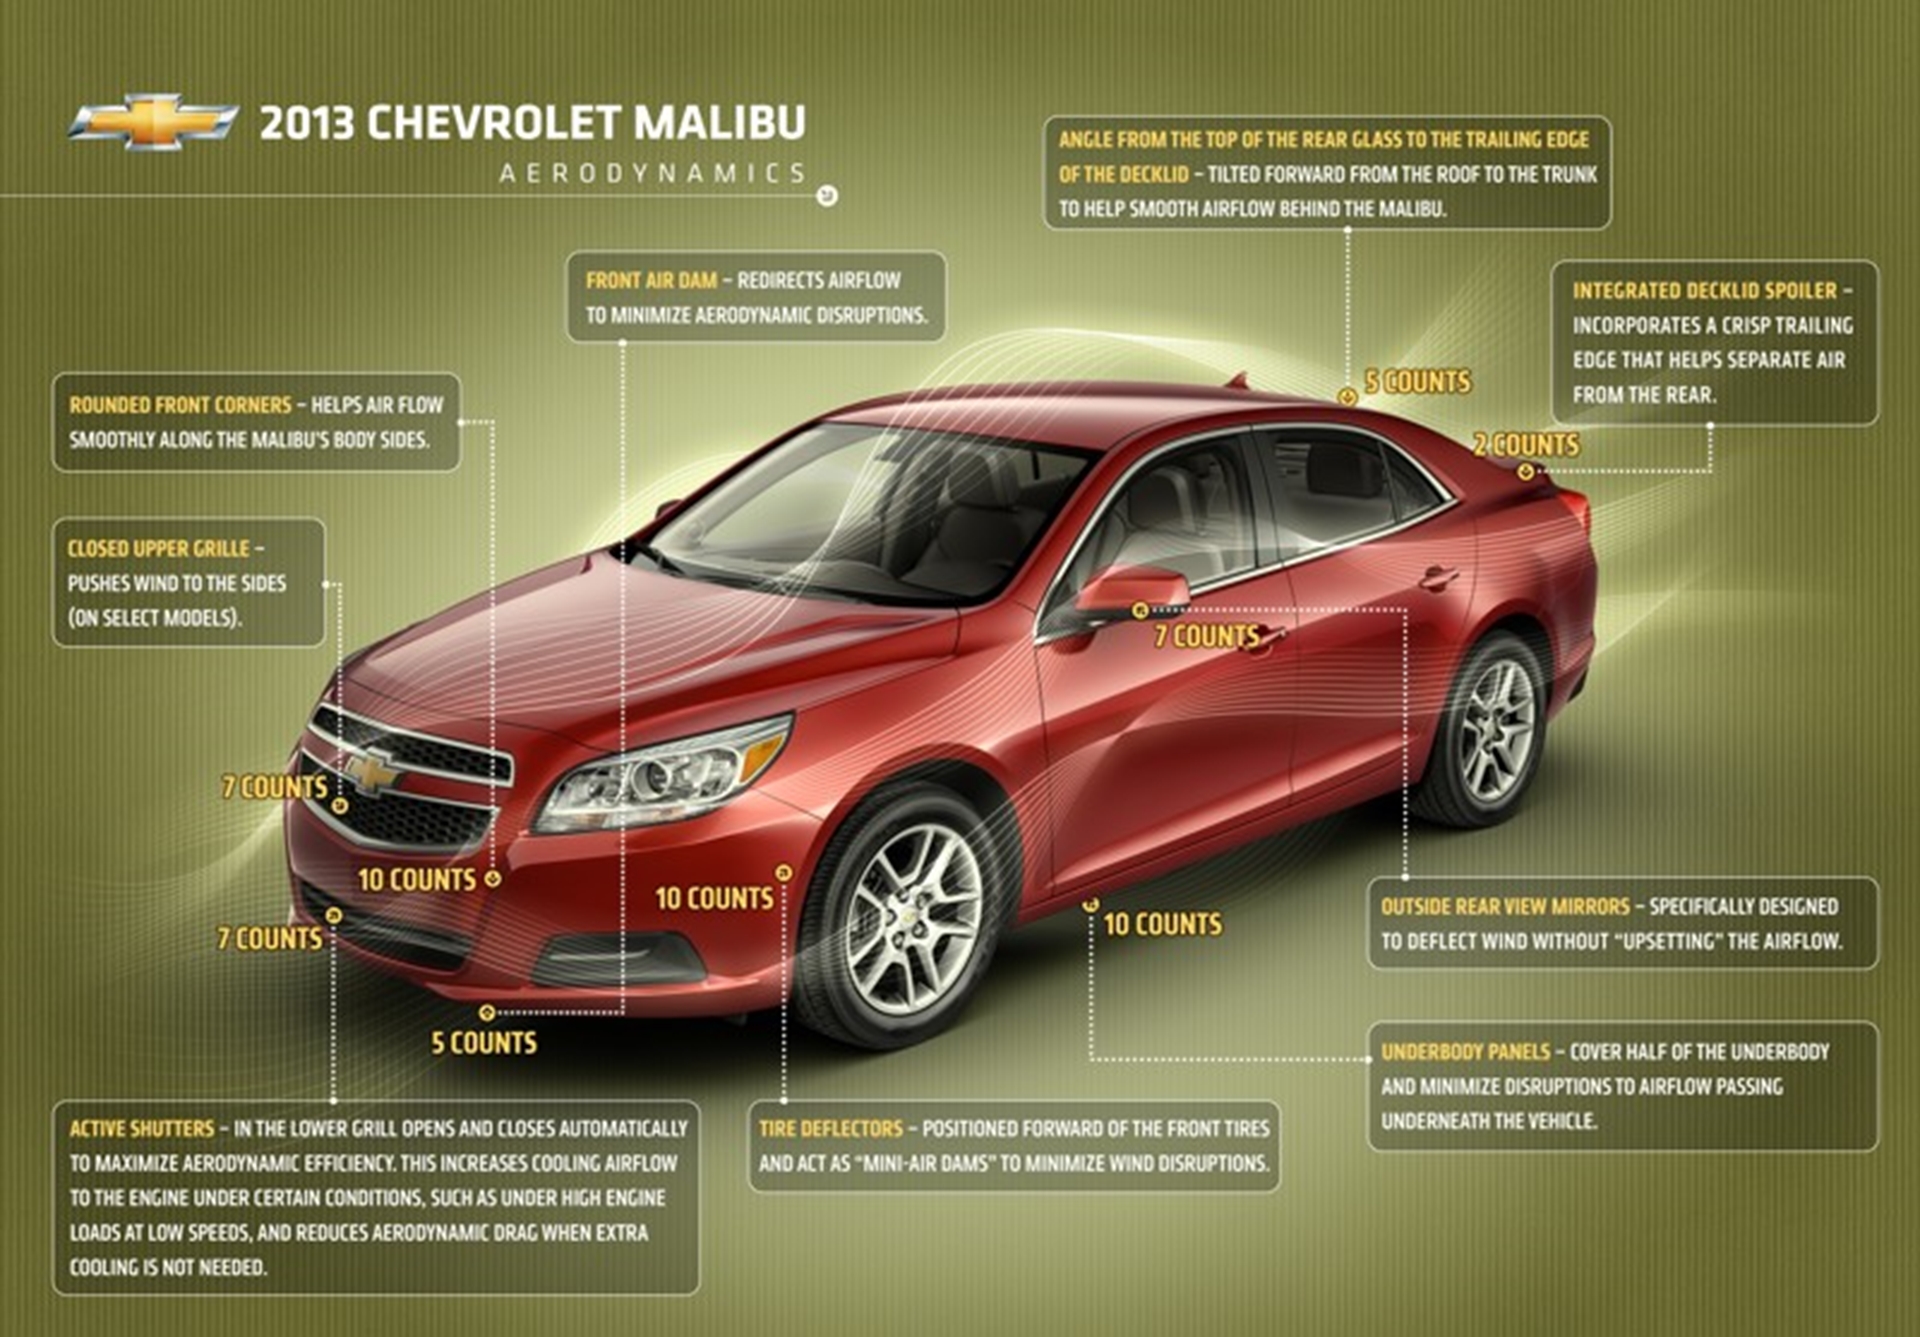 2013 Chevrolet Malibu is No Drag in Aerodynamics